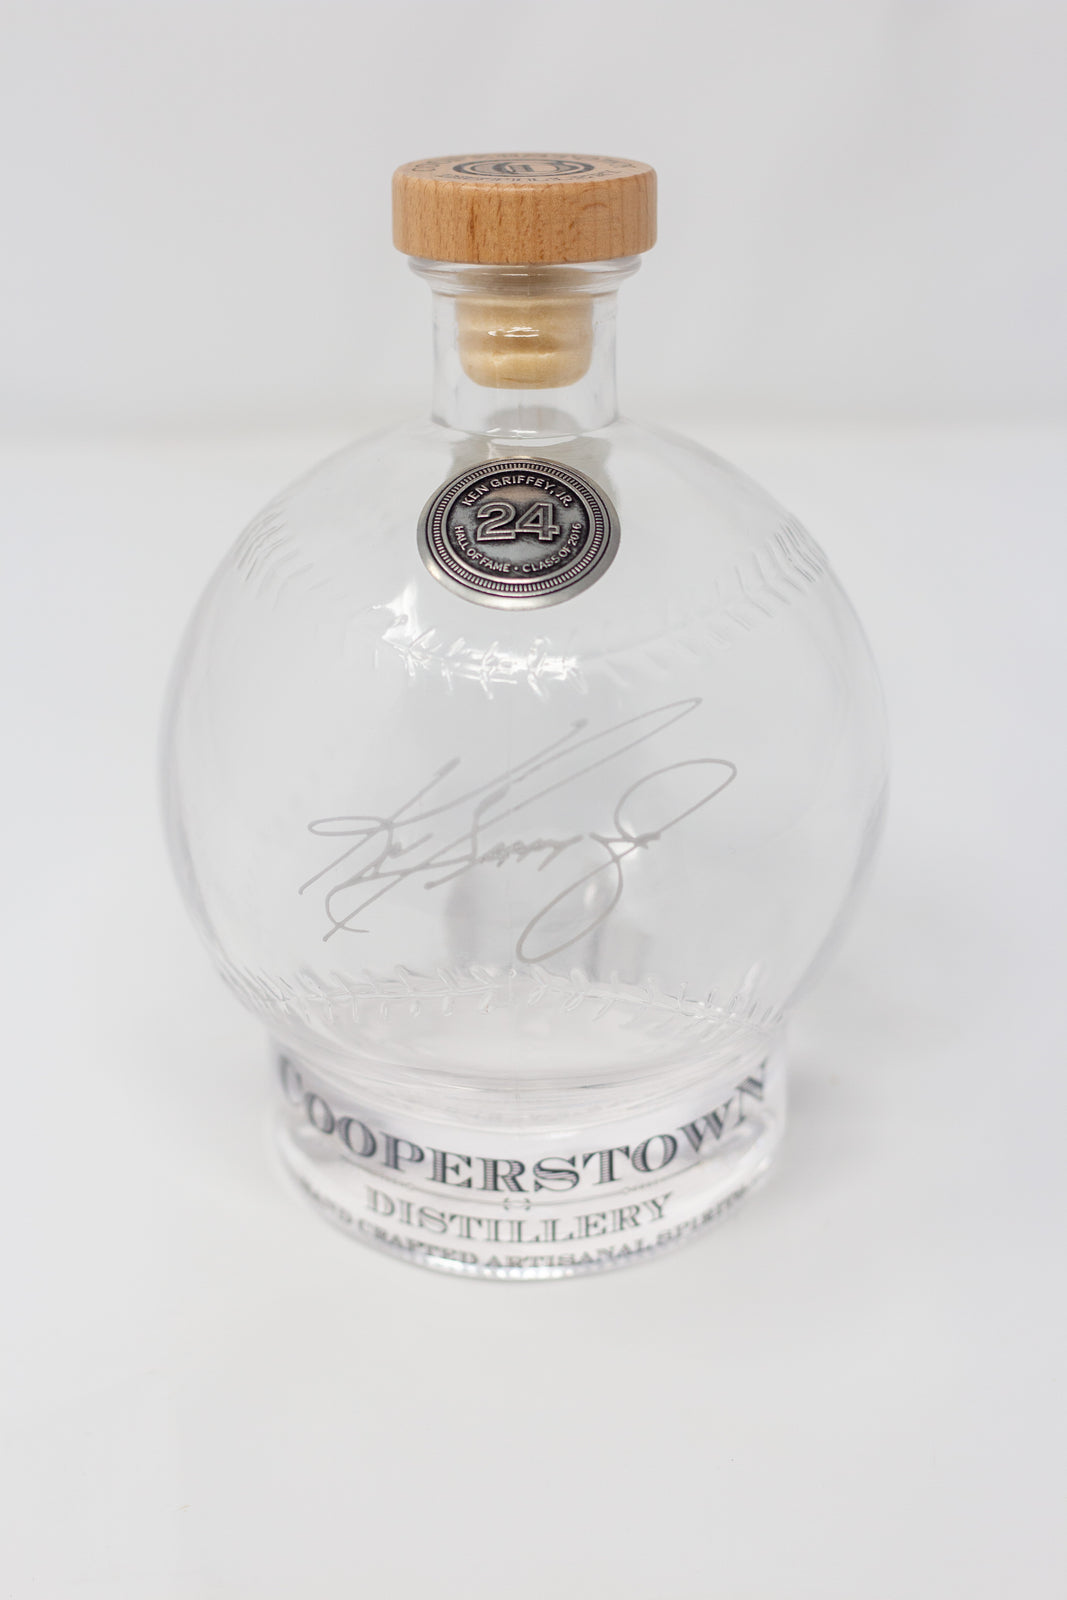 Ken Griffey, Jr. Hall of Fame Signature Series Official Signature Baseball Bottle